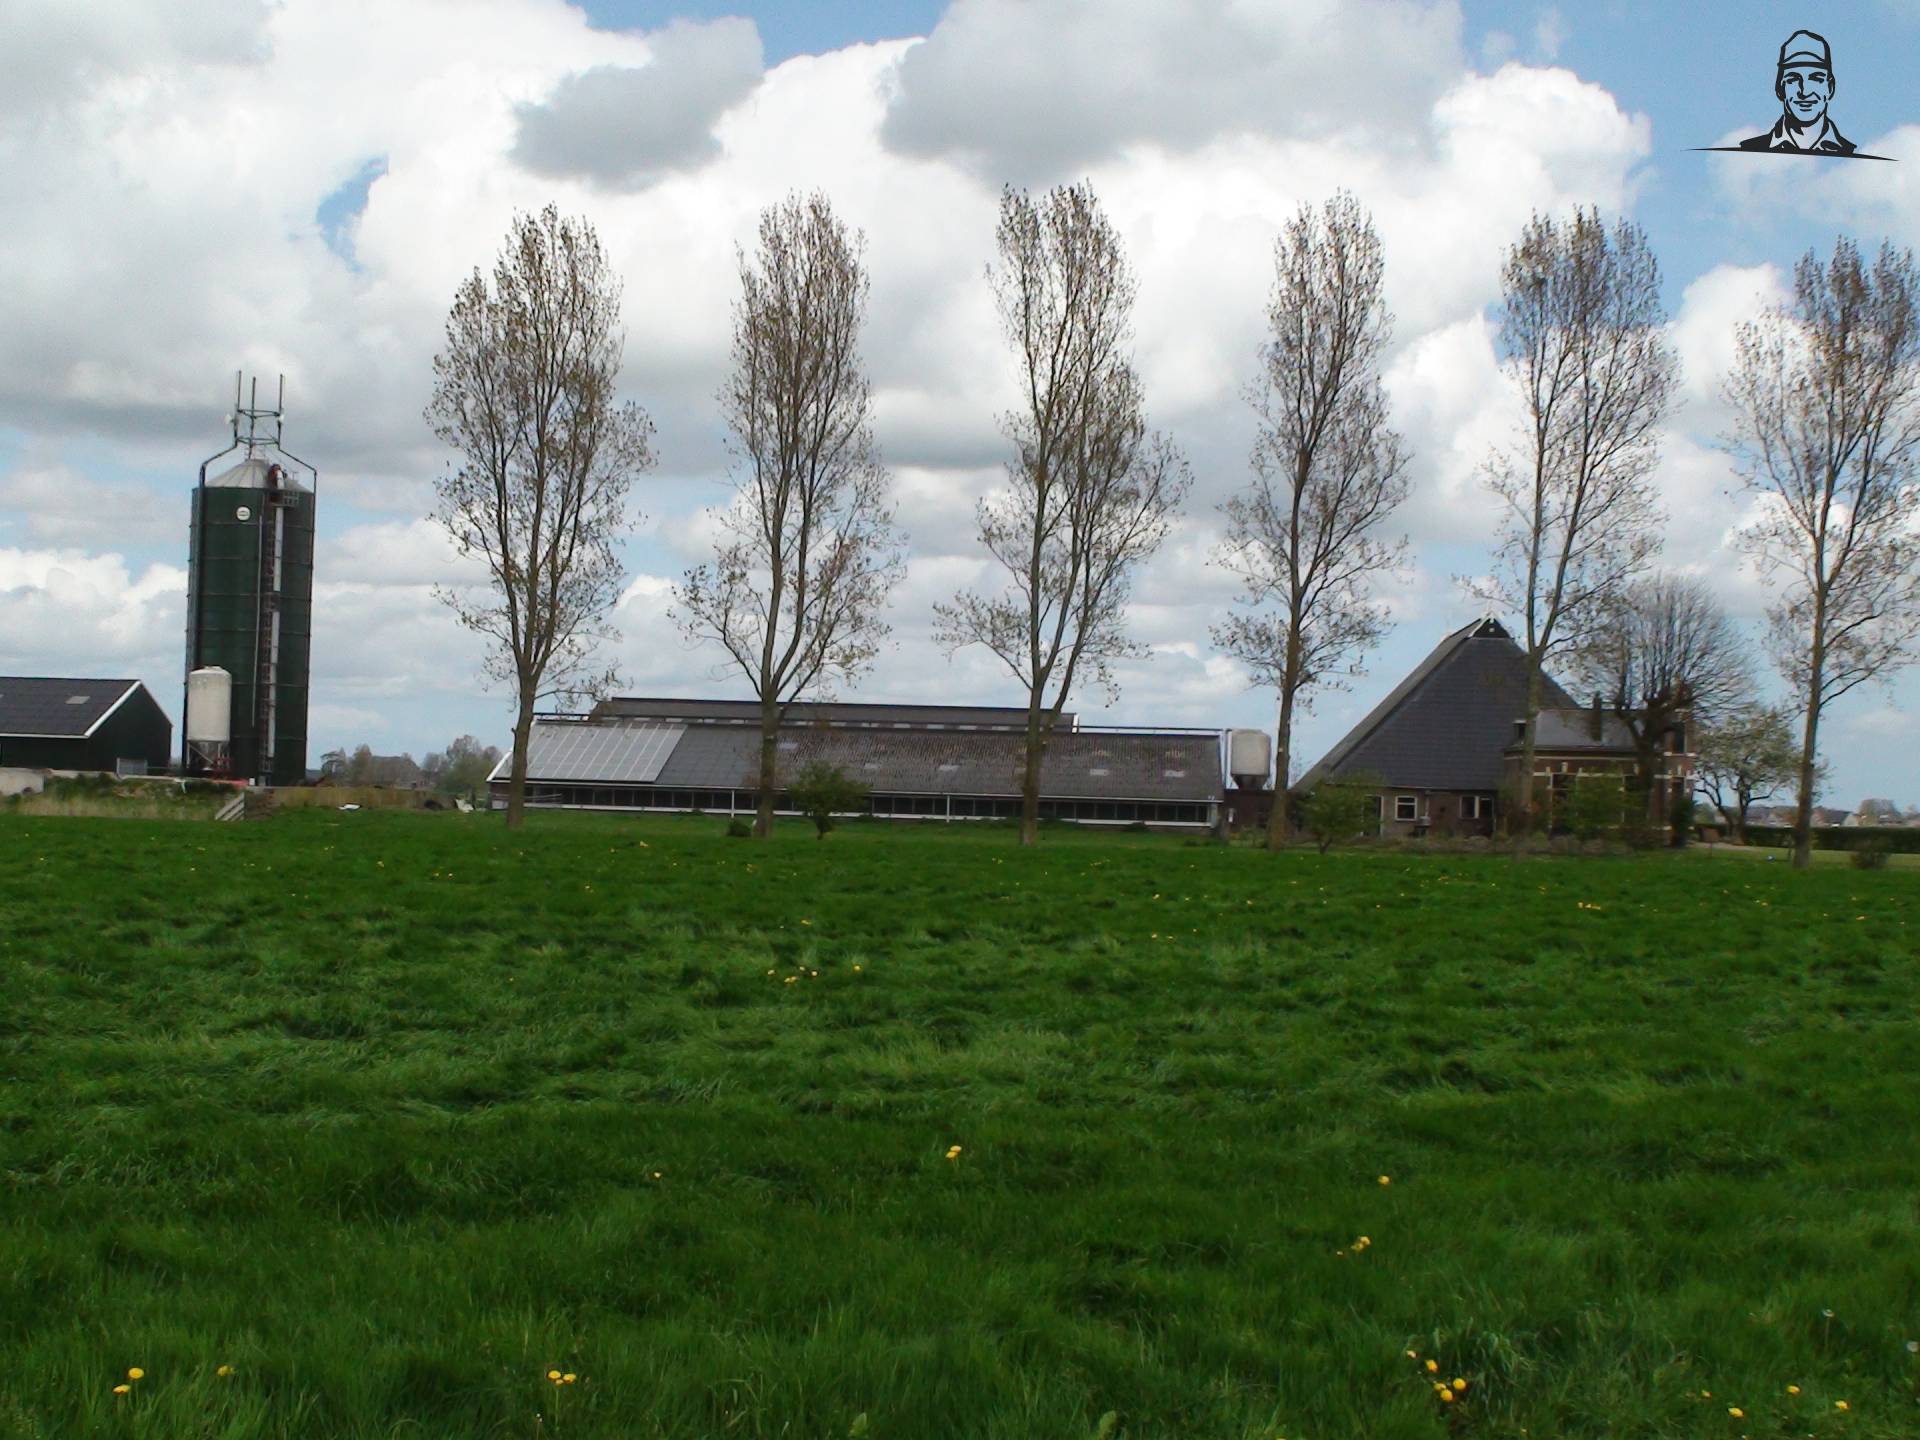 In Friesland al meer staldaken met zonnepanelen van Grasbaal